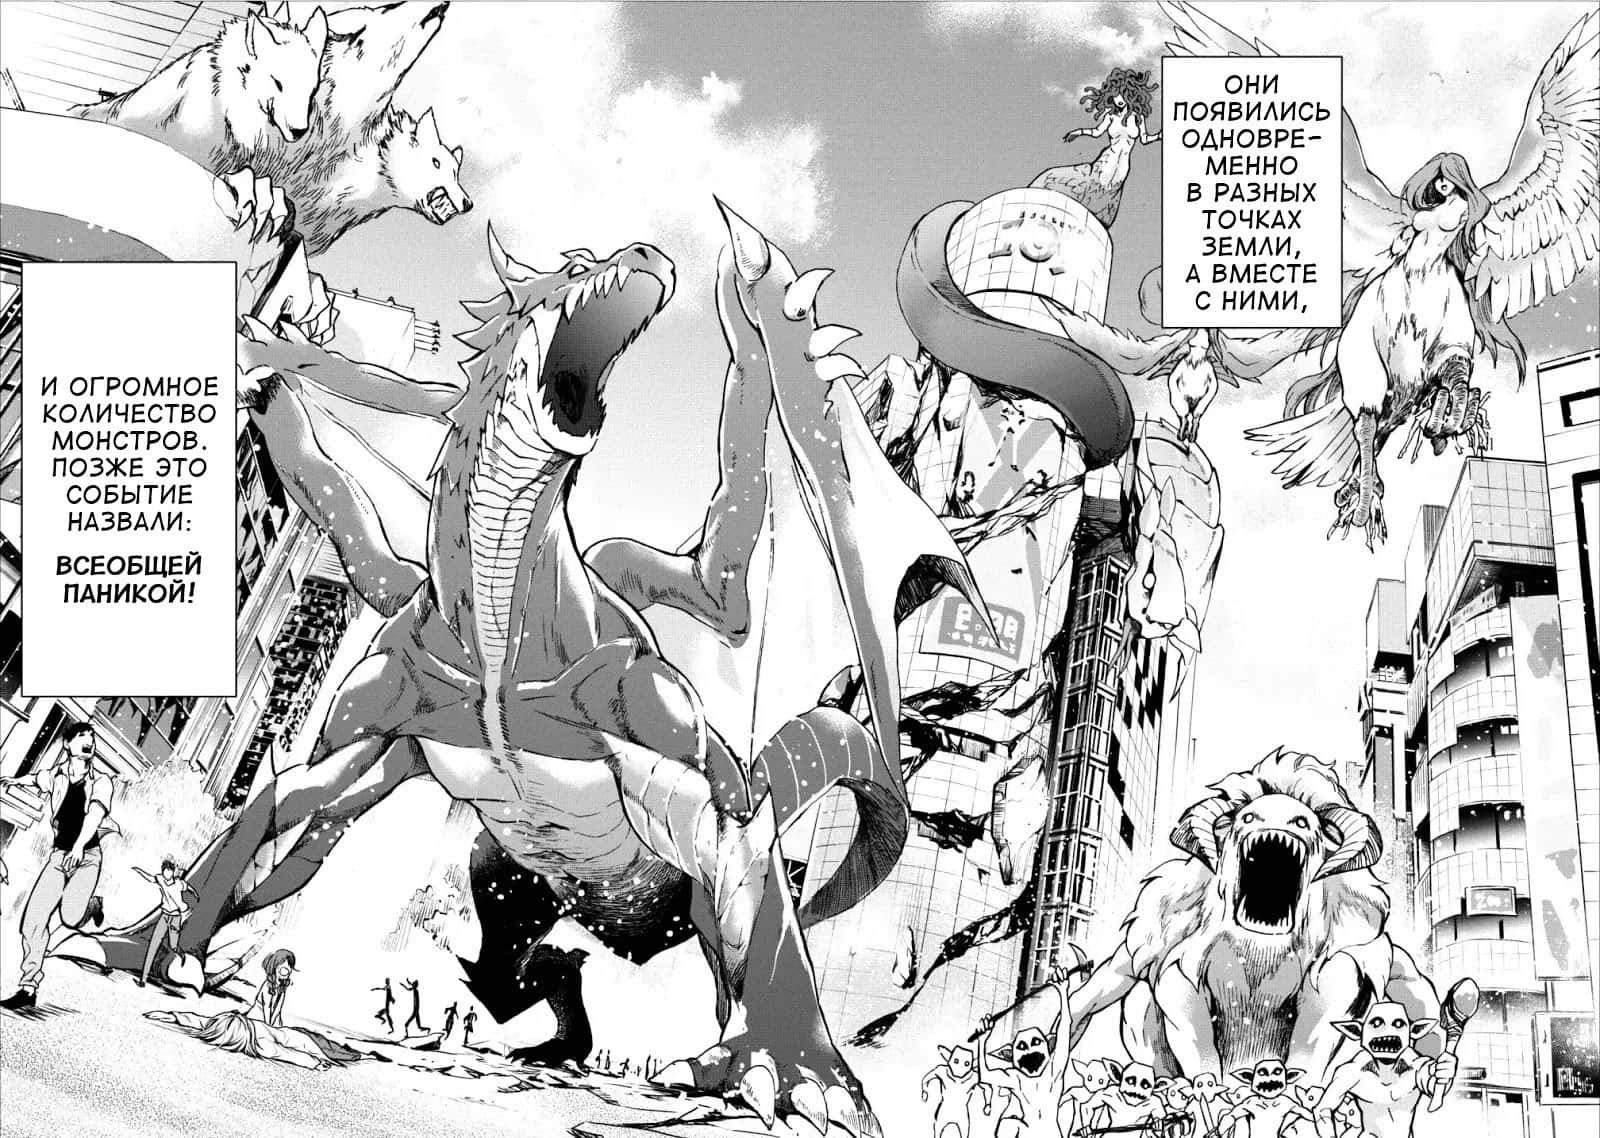 Monster invasion and hero - Comedy, Manga, Anime, Fantasy, Monster, Longpost